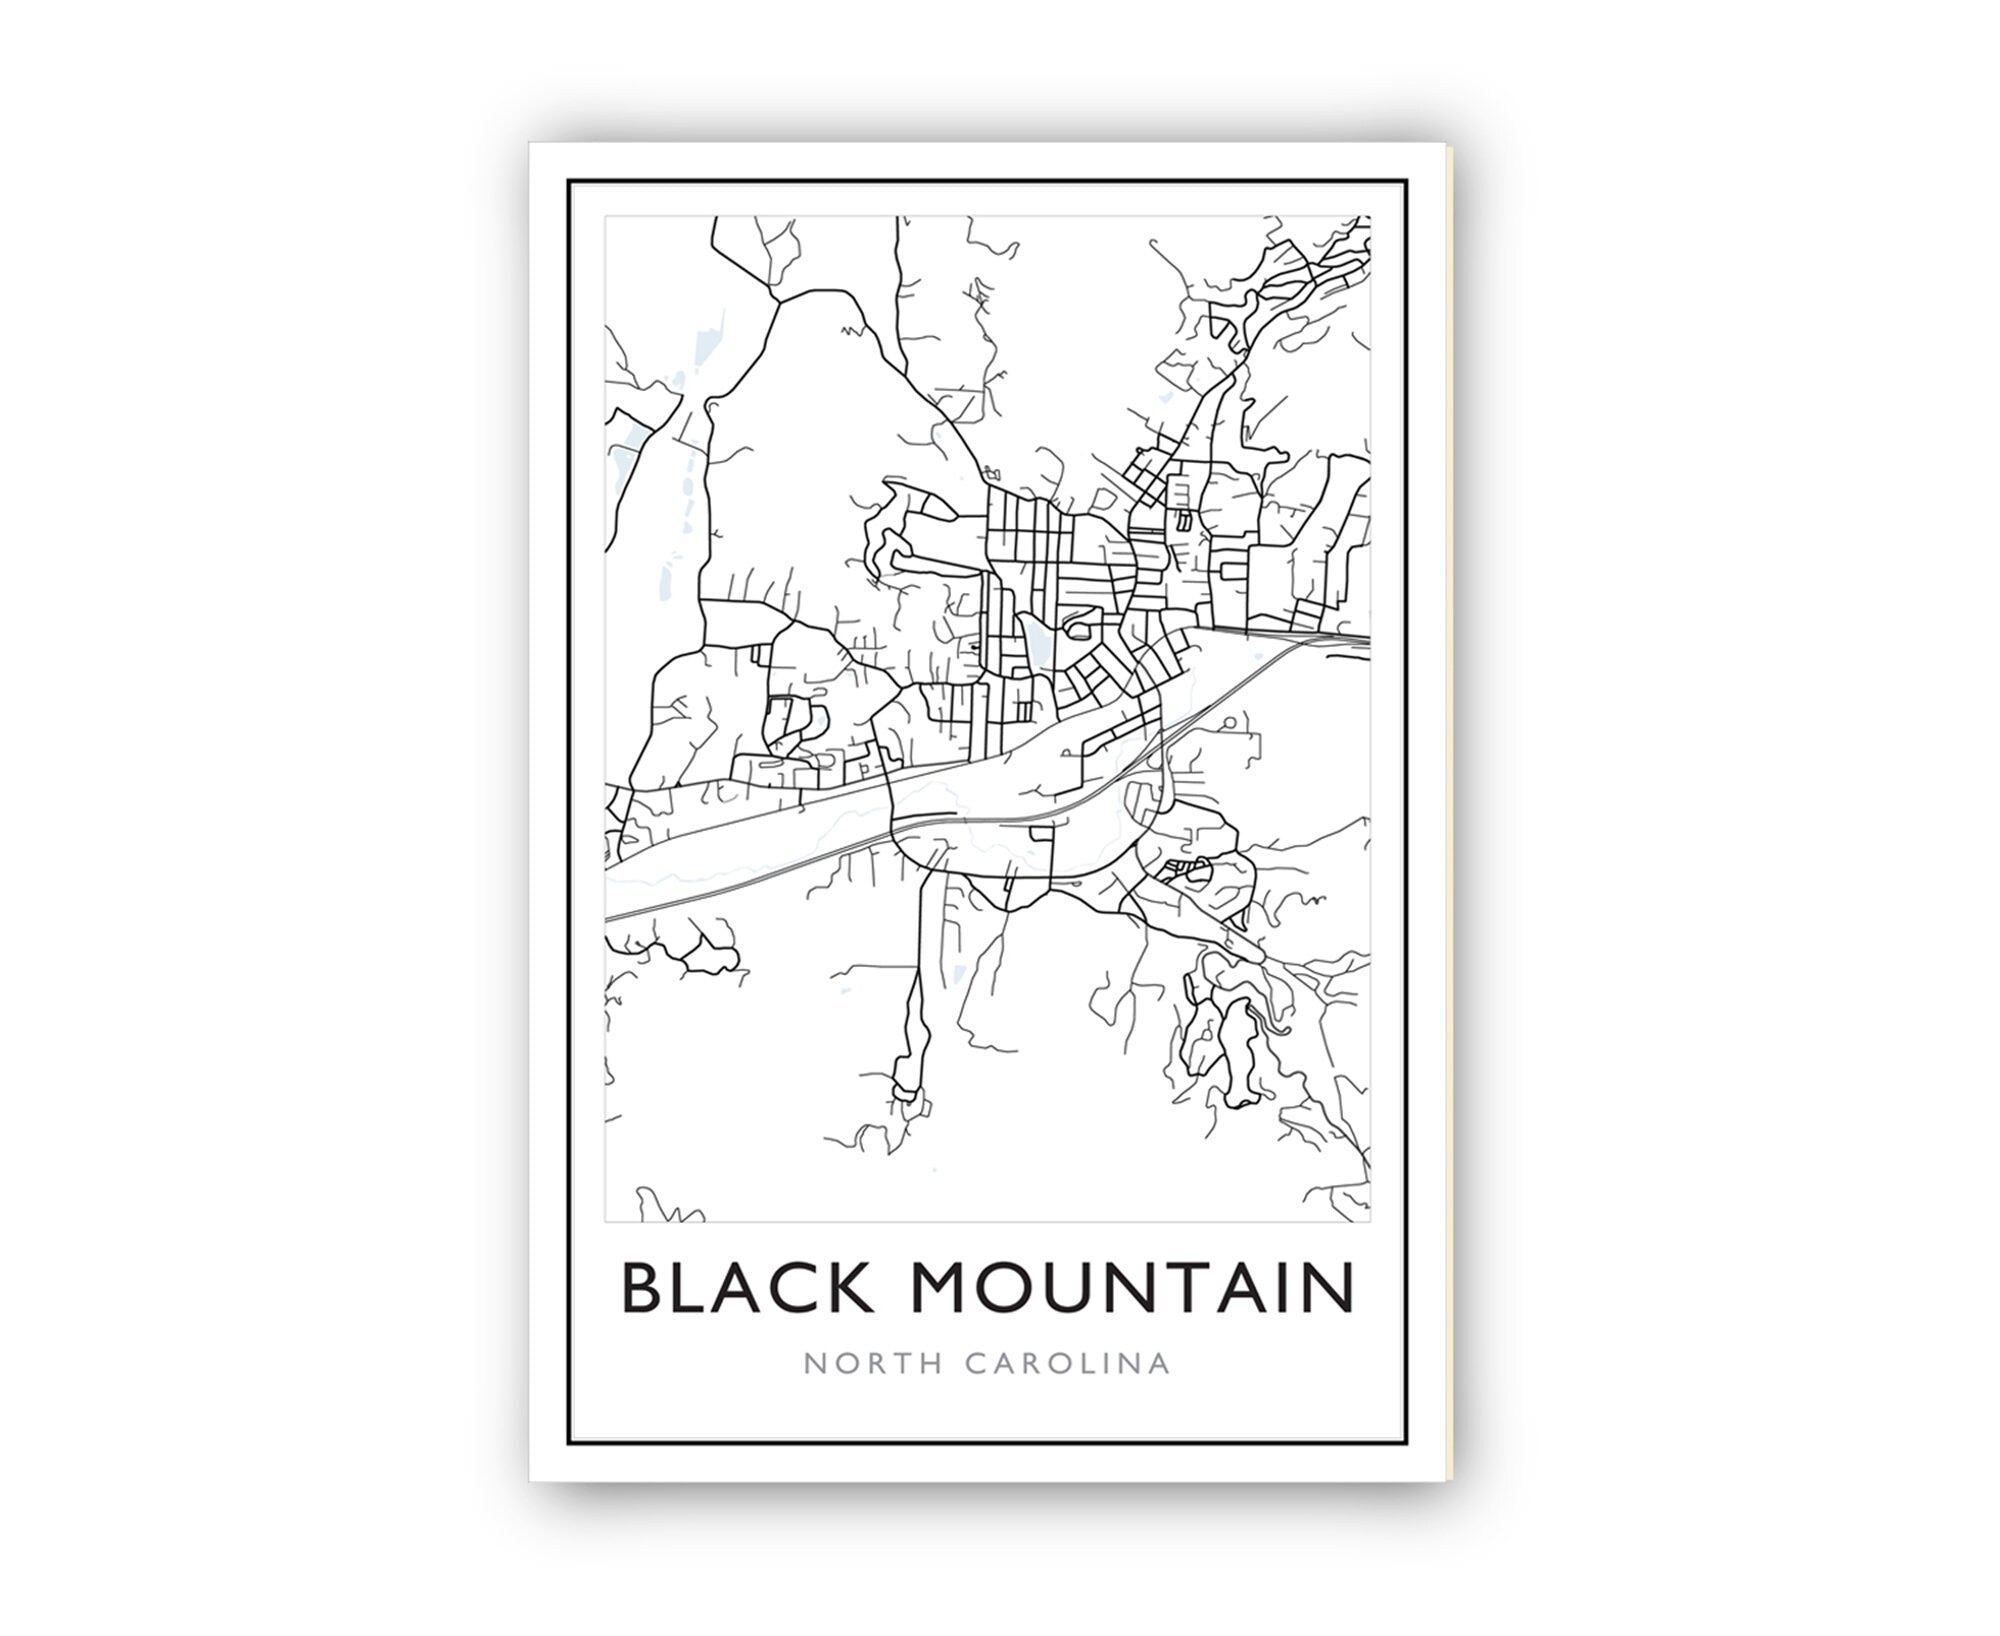 Black Mountain Map, Black Mountain City Road Map , Black Mountain North Carolina Street Map, Modern US City Map, Home Decor, Office Wall Art